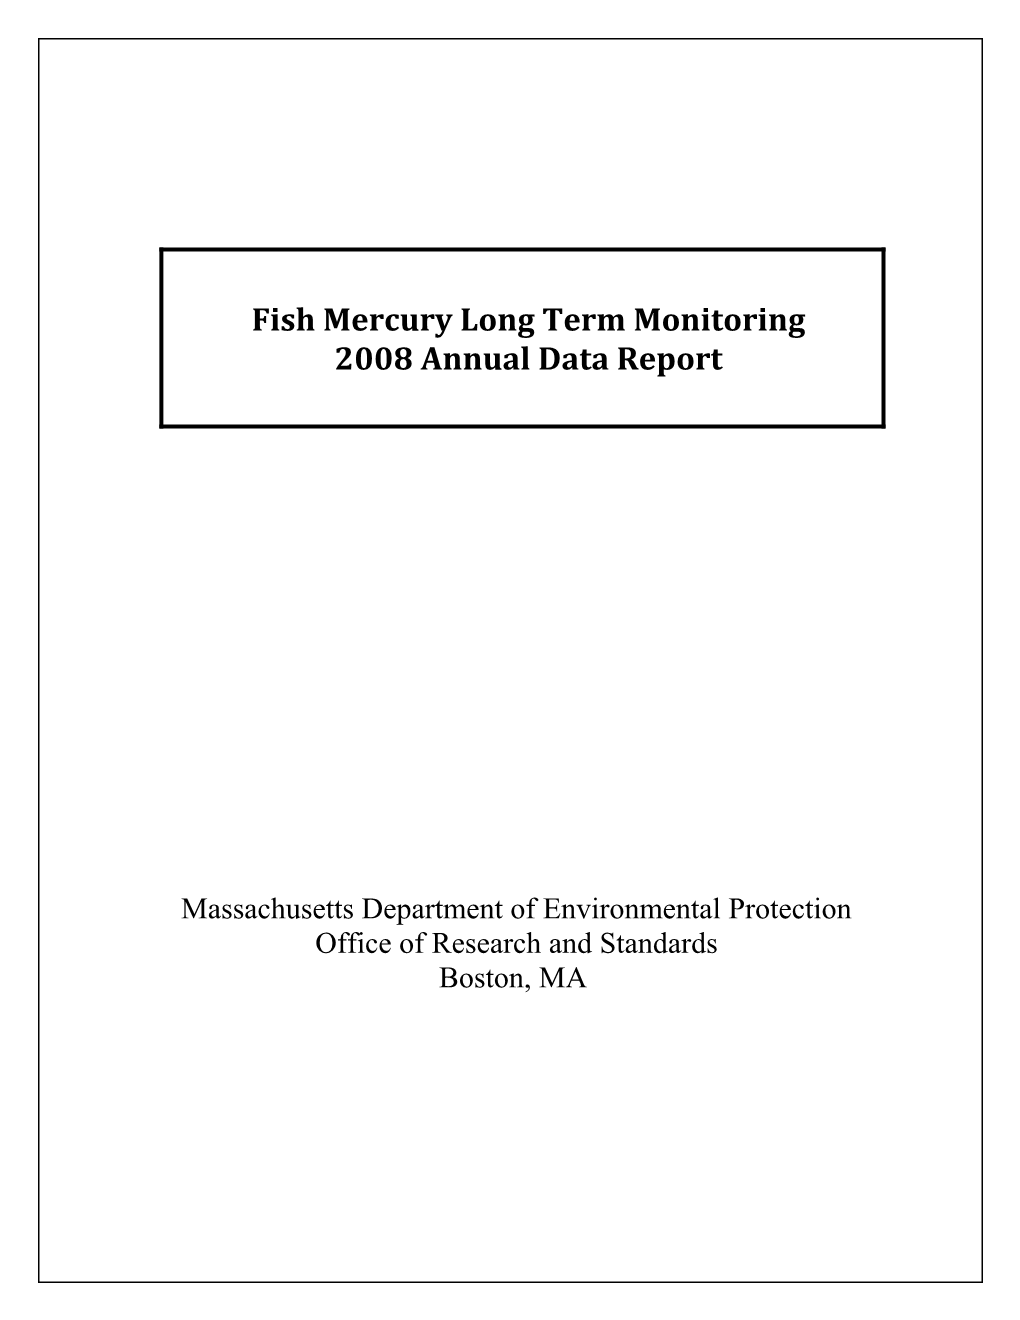 Fish Mercury Long-Term Monitoring 2008 Annual Data Report